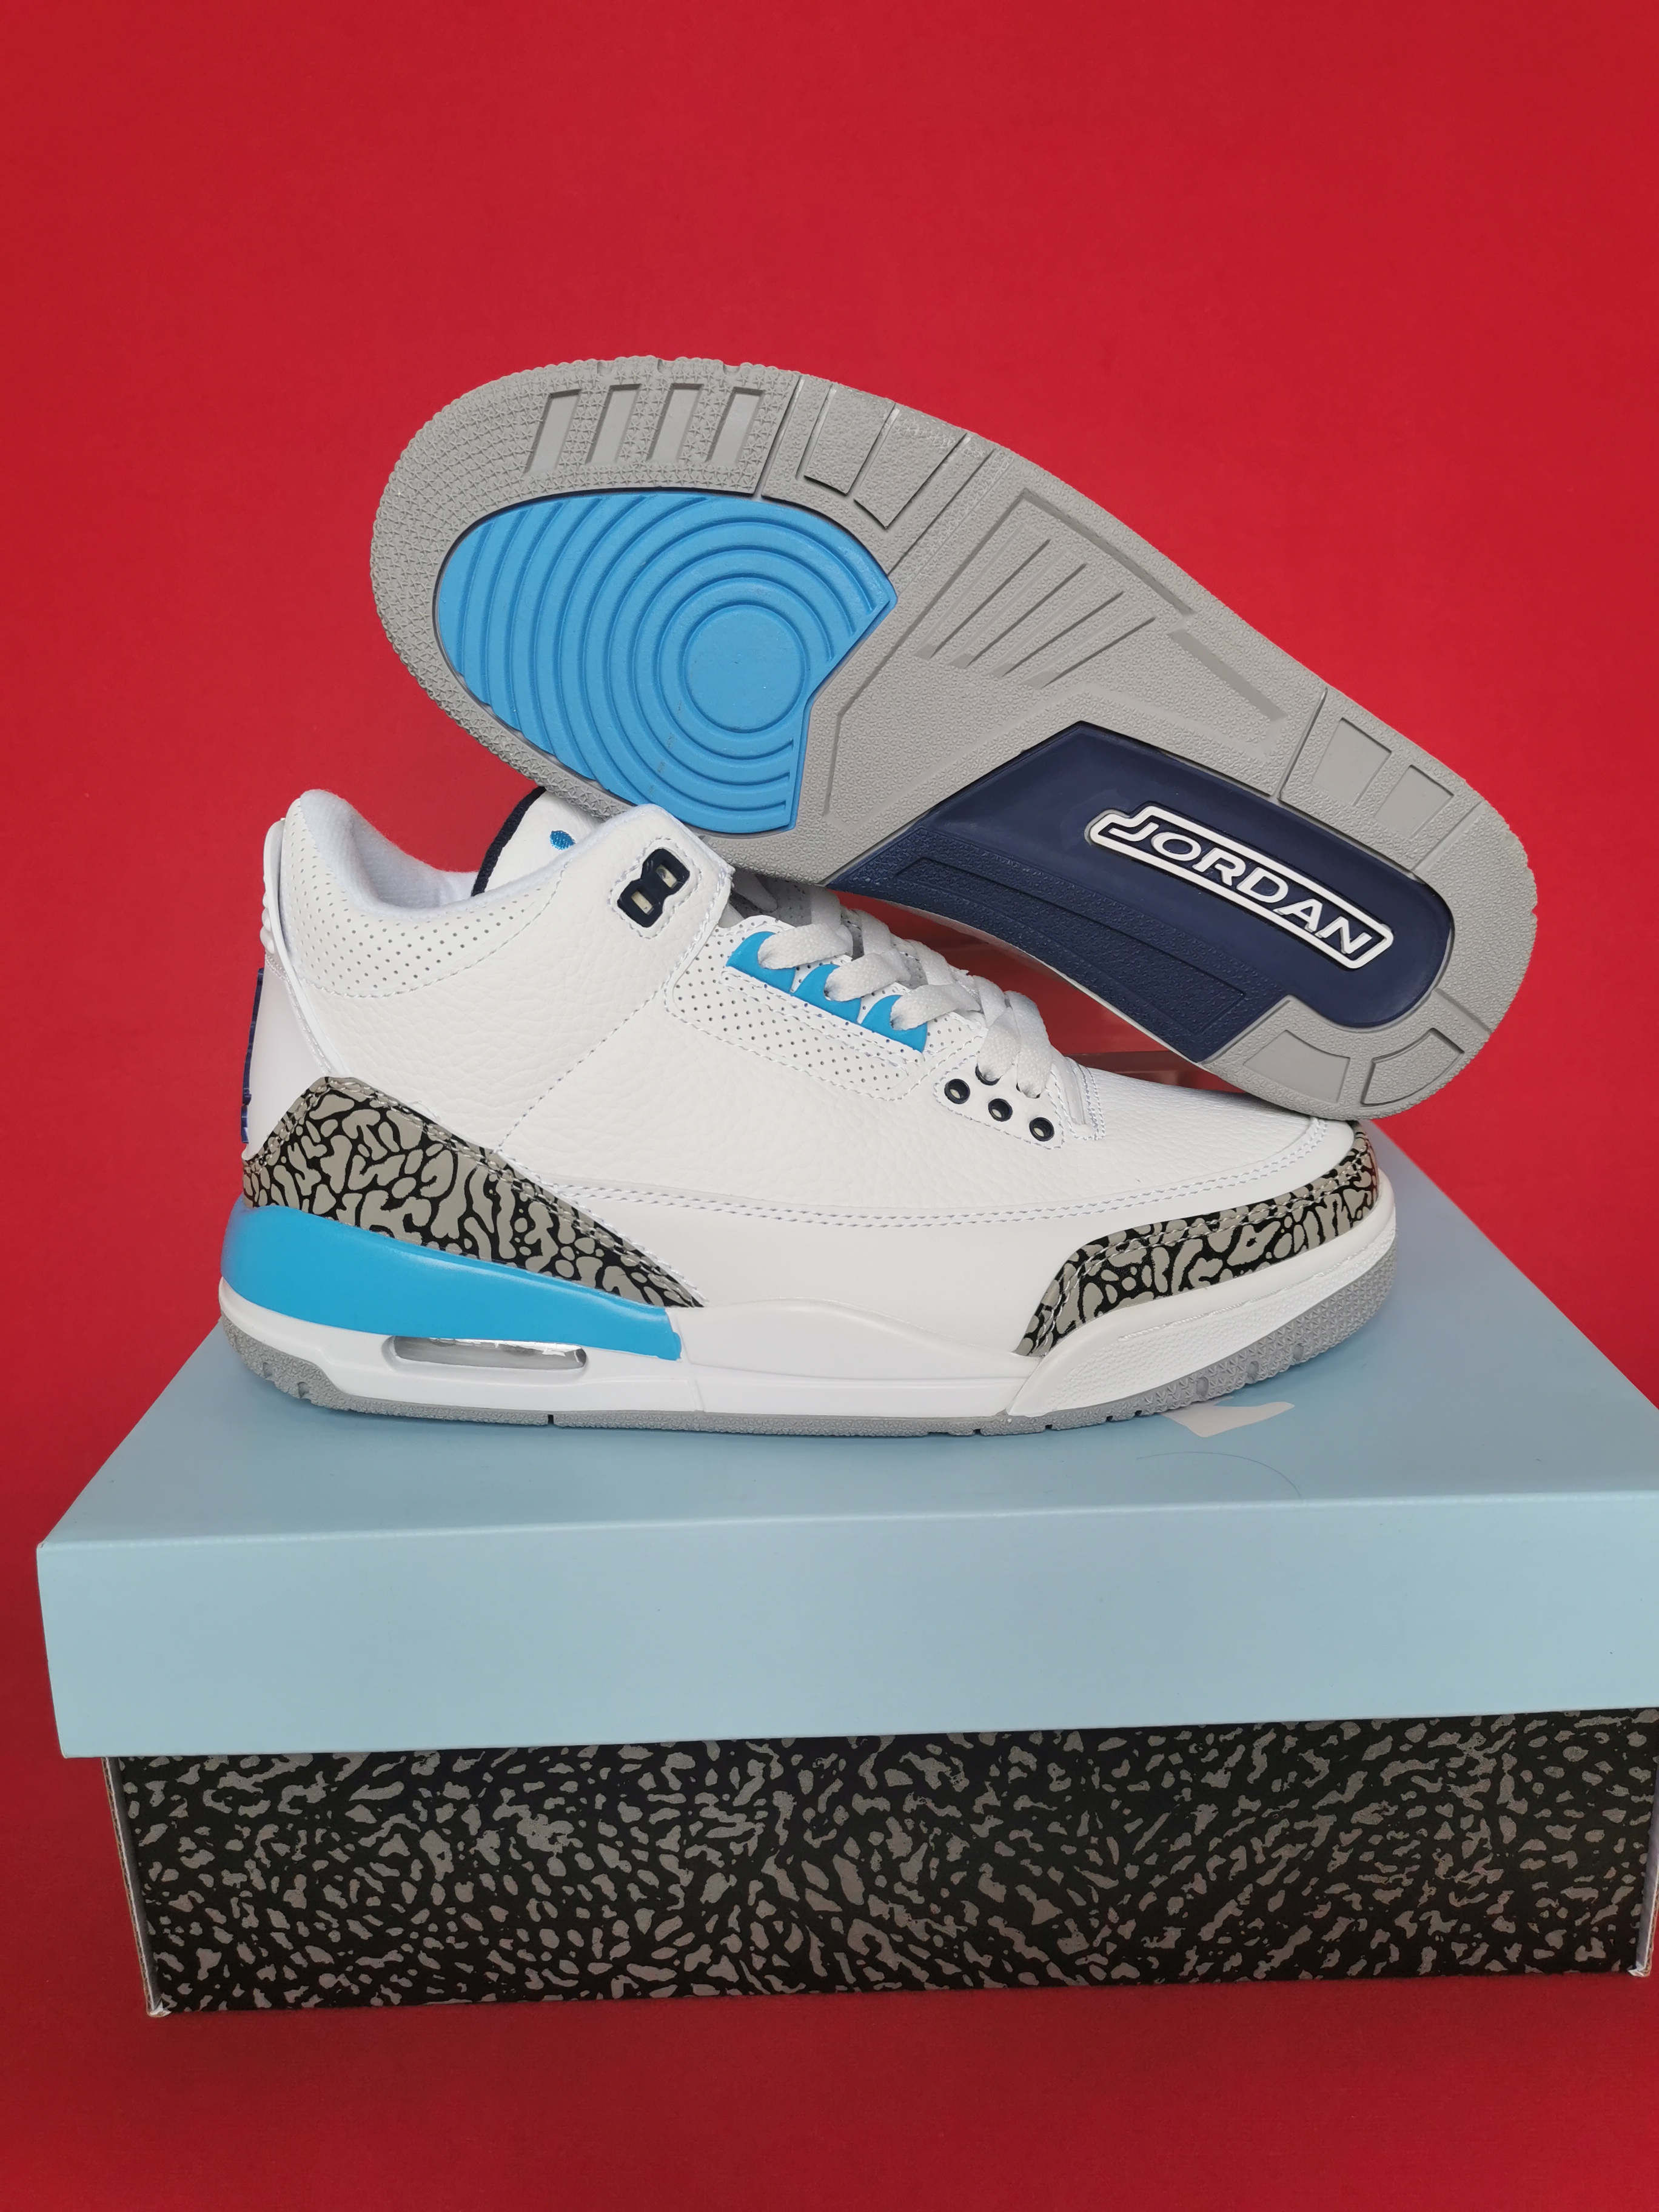 Air Jordan 3 OG White Baby Blue Grey Shoes